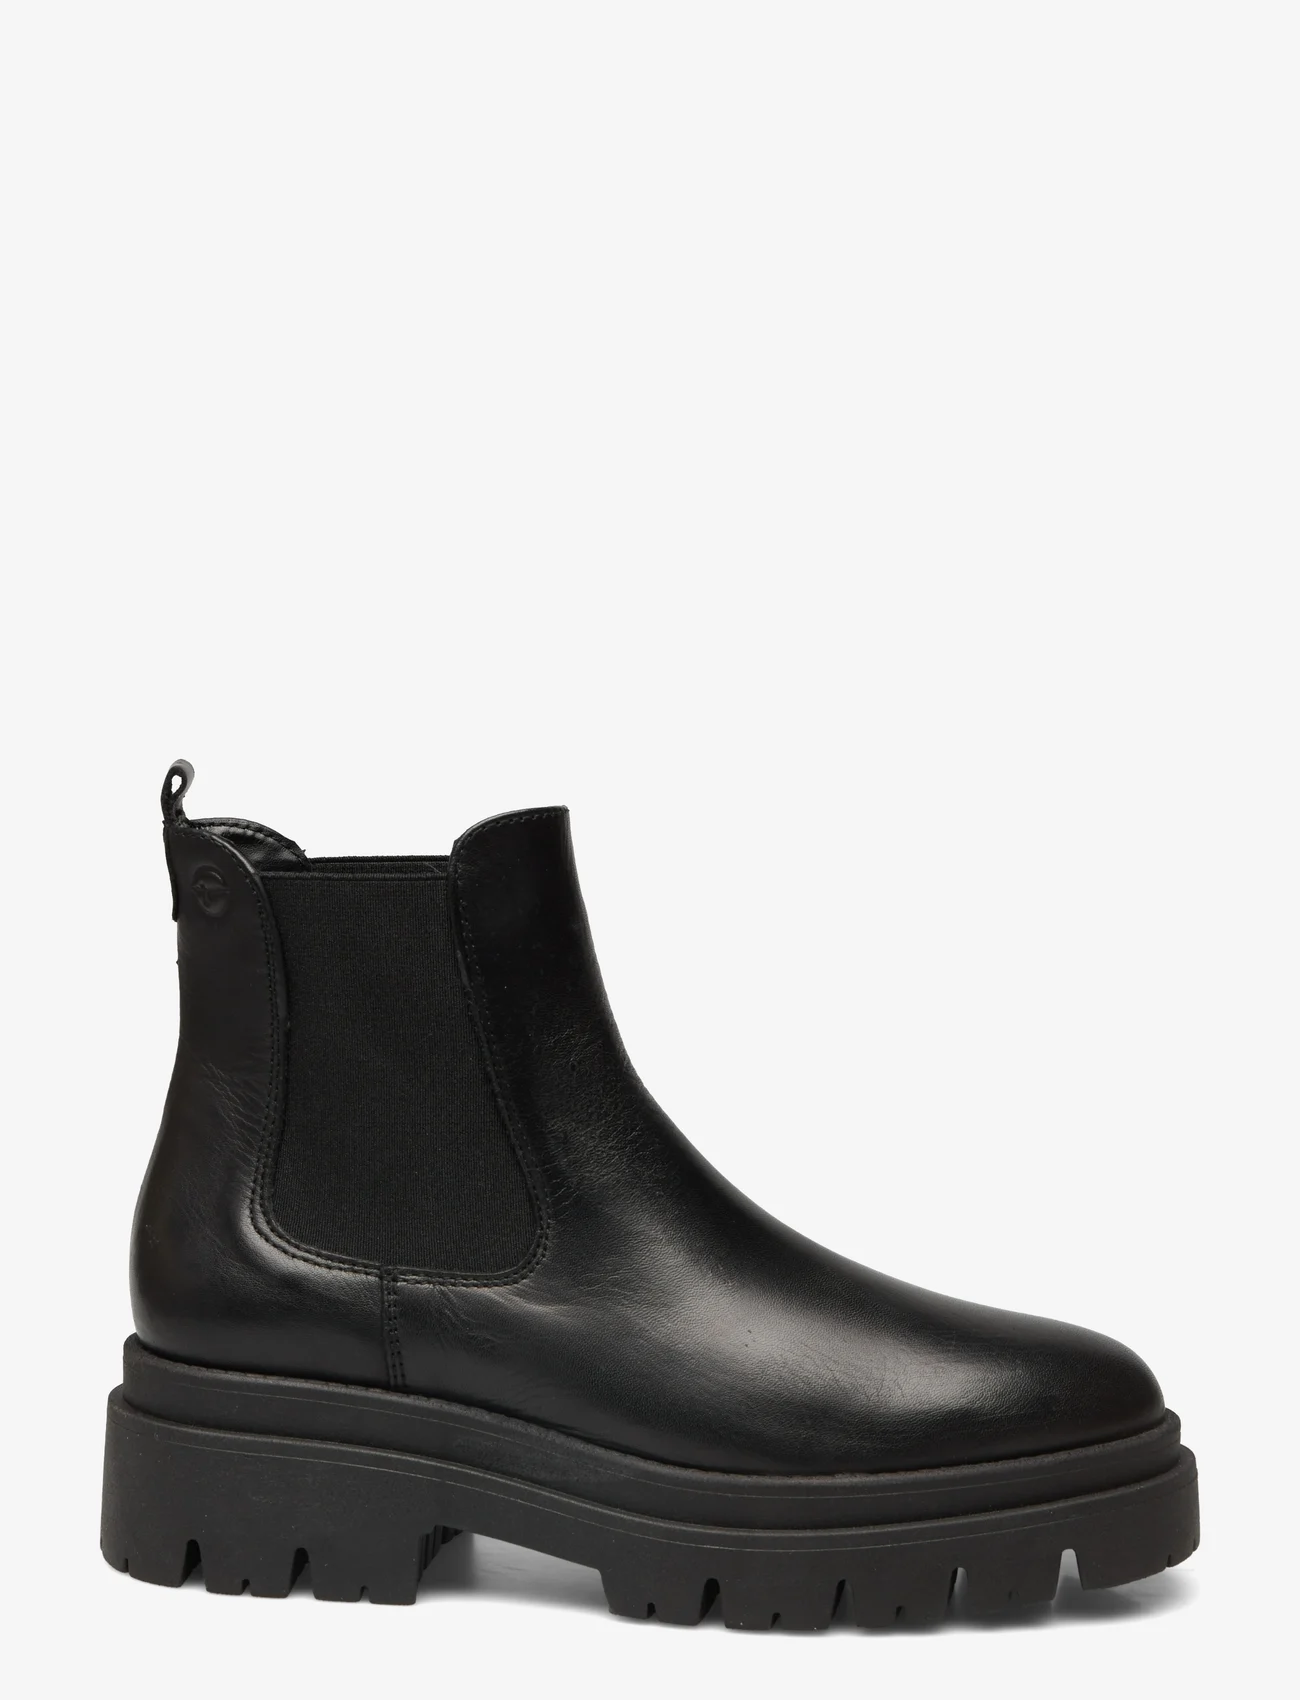 Tamaris - Women Boots - chelsea-saapad - black leather - 1